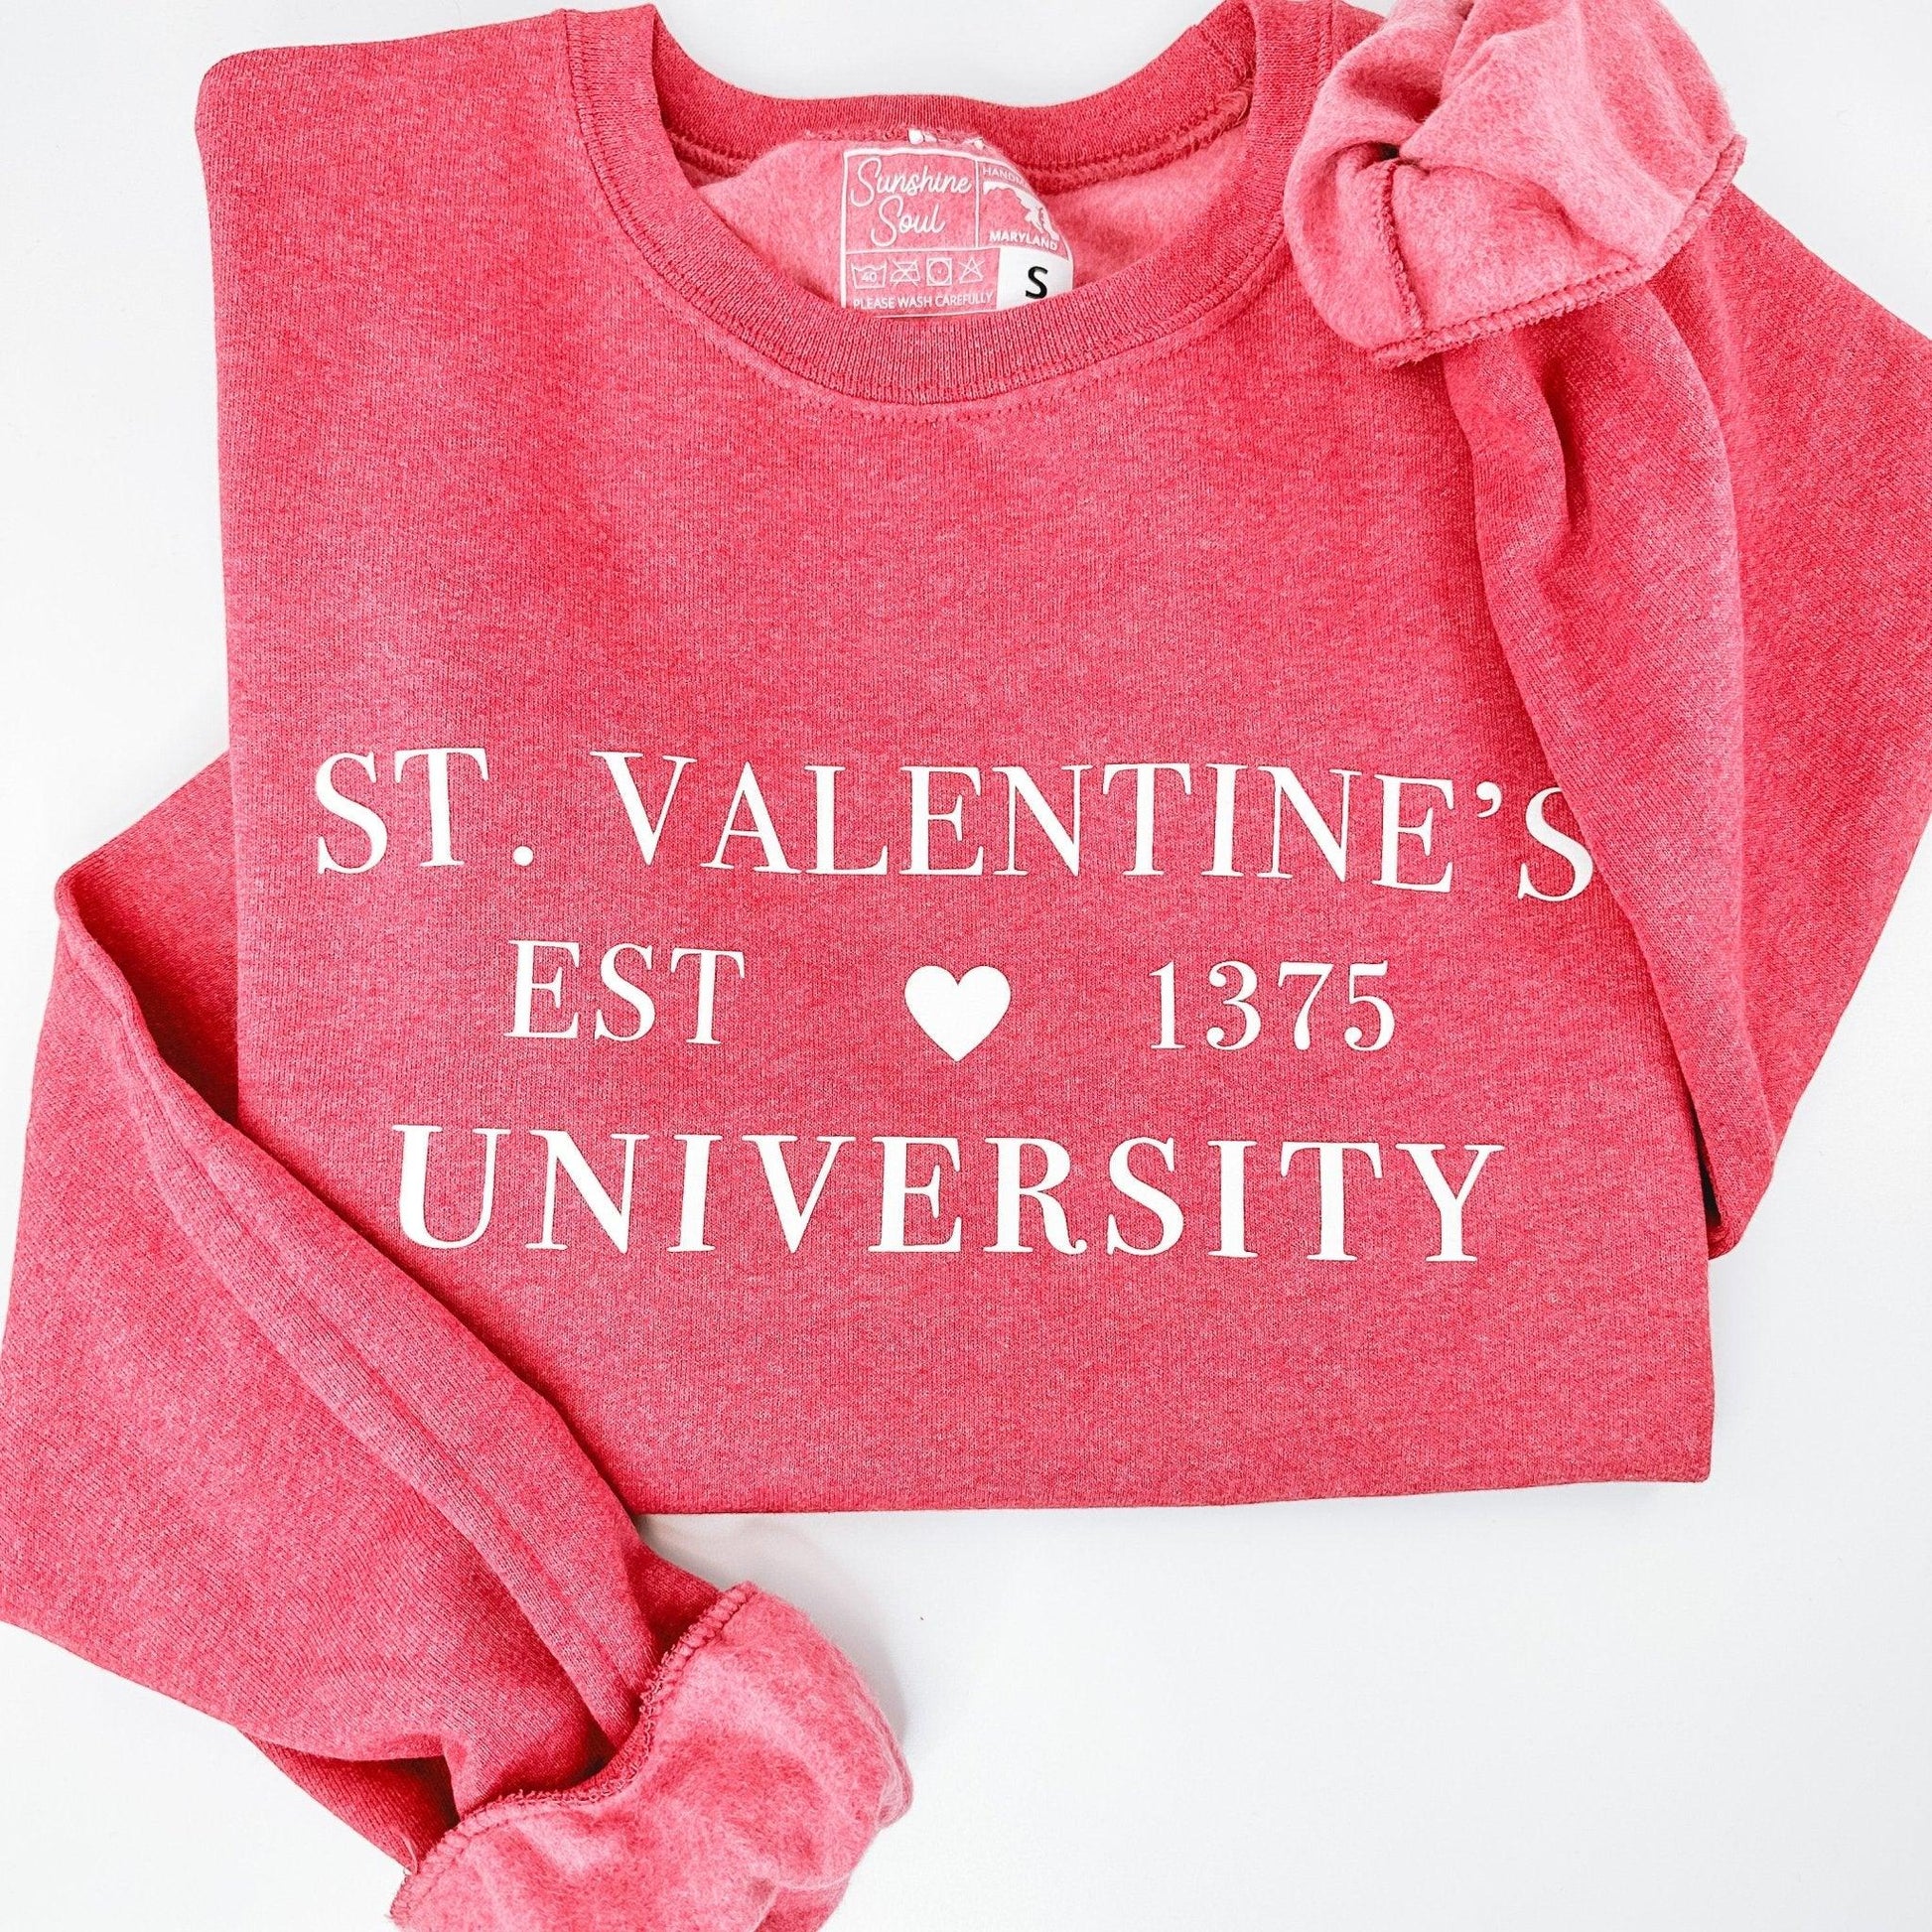 St. Valentine's University Sweatshirt - Sunshine Soul MD